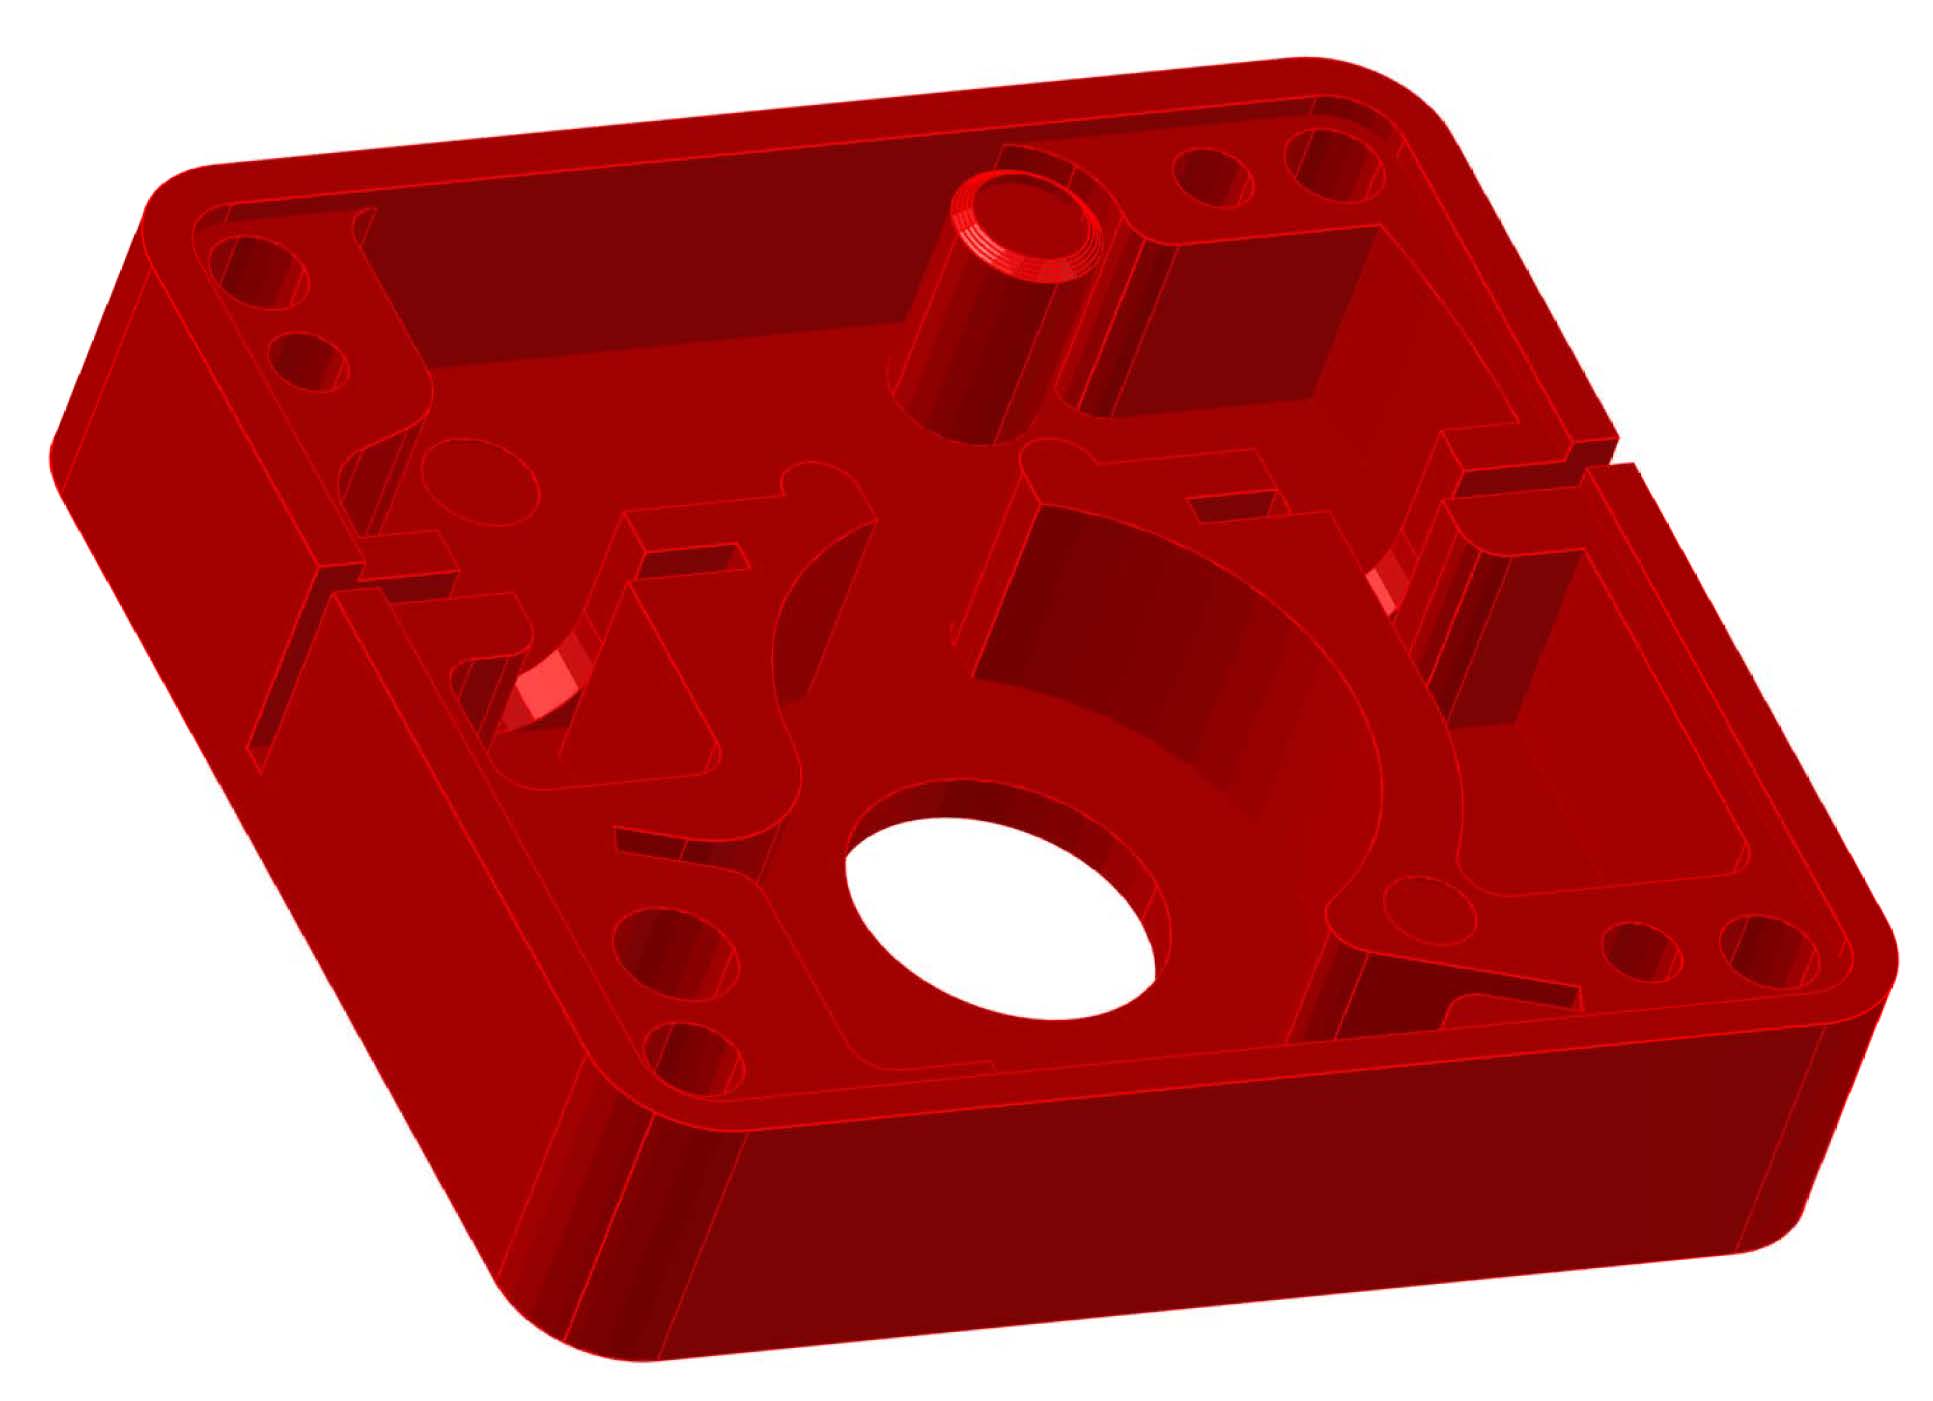 EE-3 Stock Box 3D Model.jpg